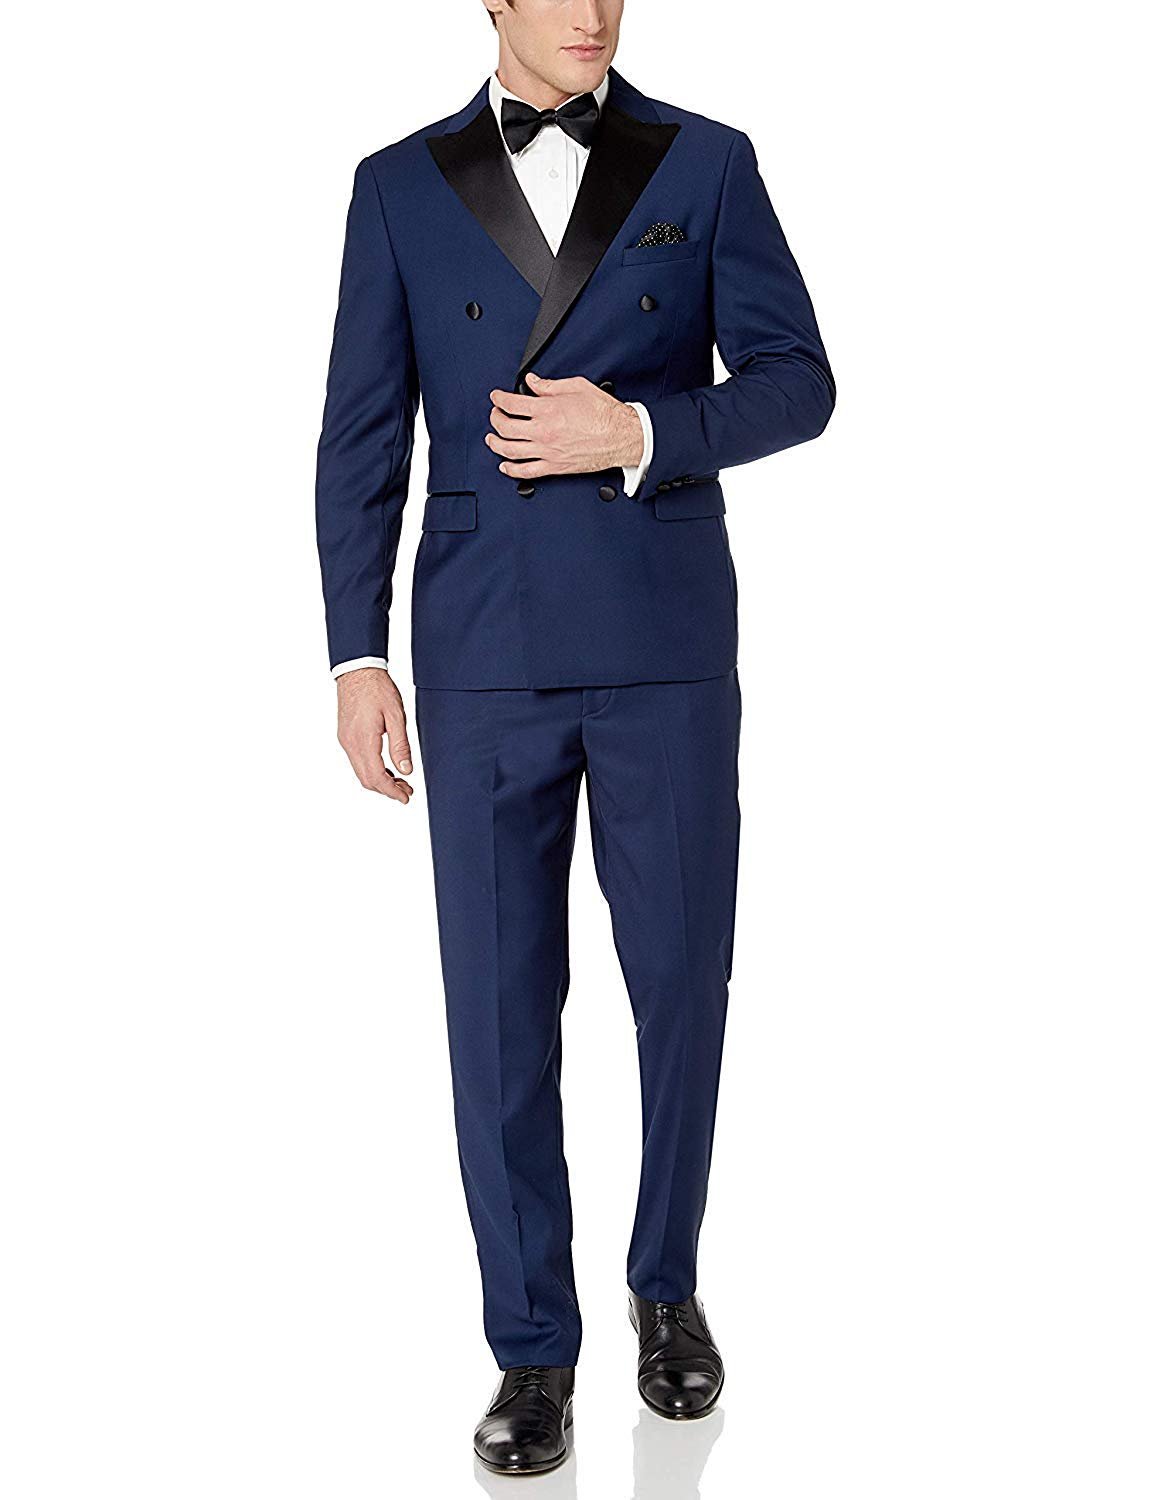 Adam Baker Men's 91003 Regular Fit 2-Piece Double Breasted Shawl Collar Tuxedo - Midnight Blue - 34S - image 1 of 10